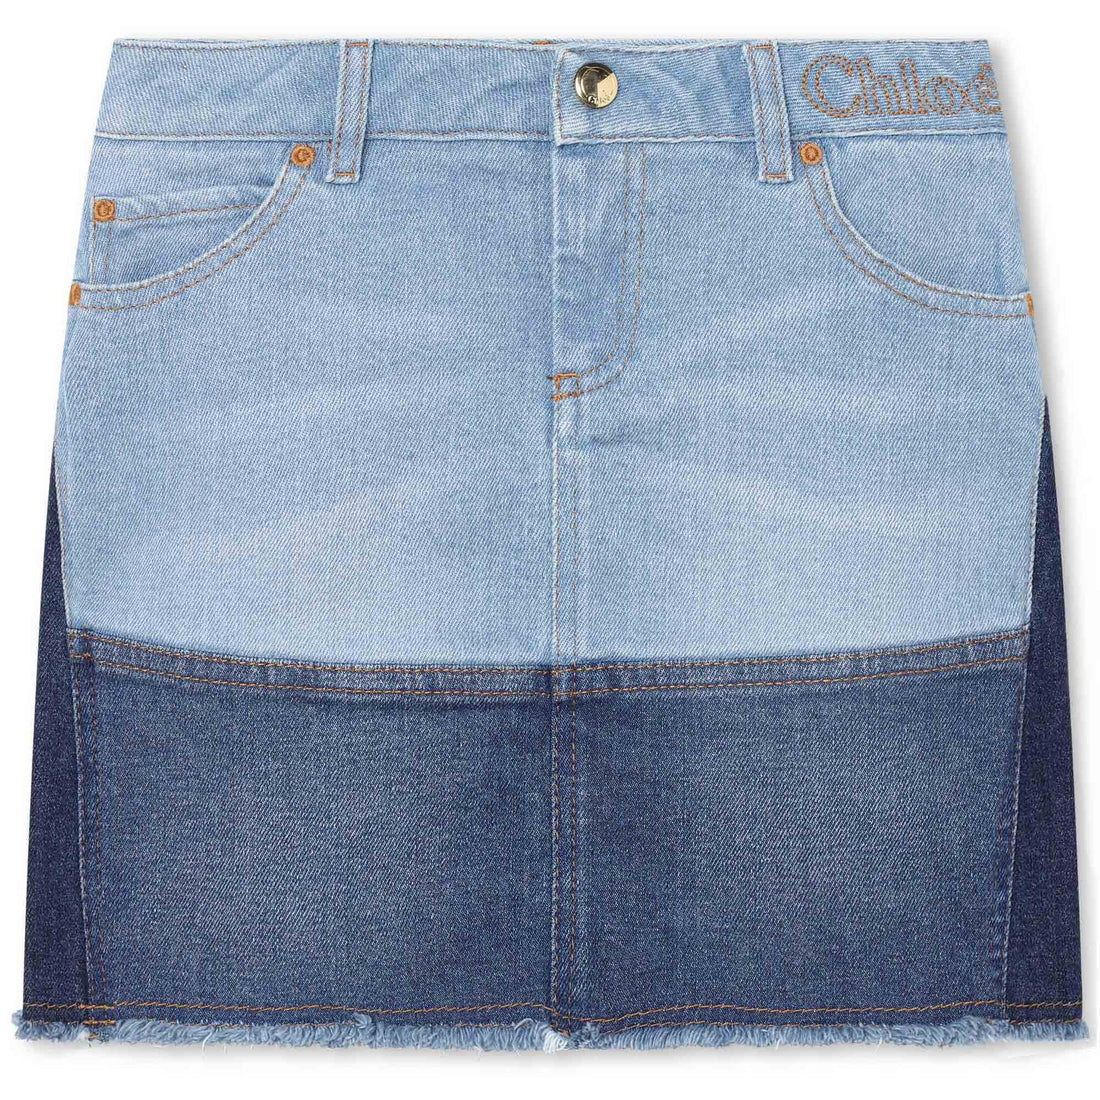 Chloe Denim Skirt Style: C13290